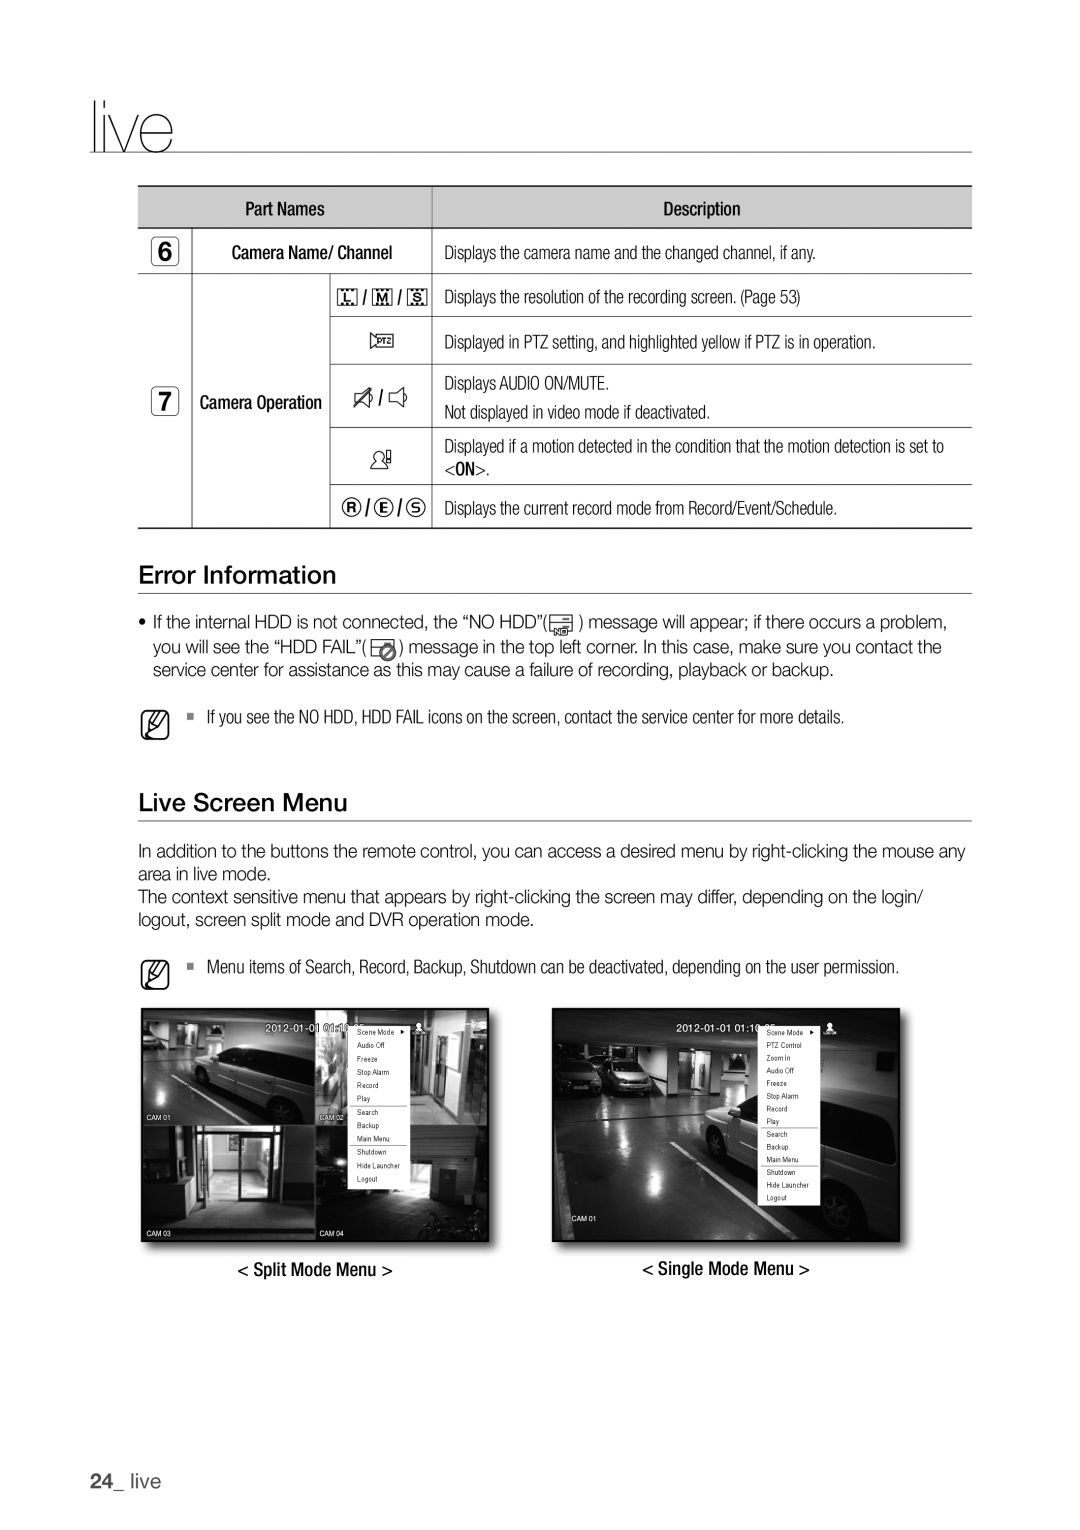 Samsung SDR3100 user manual error information, Live Screen menu, live 